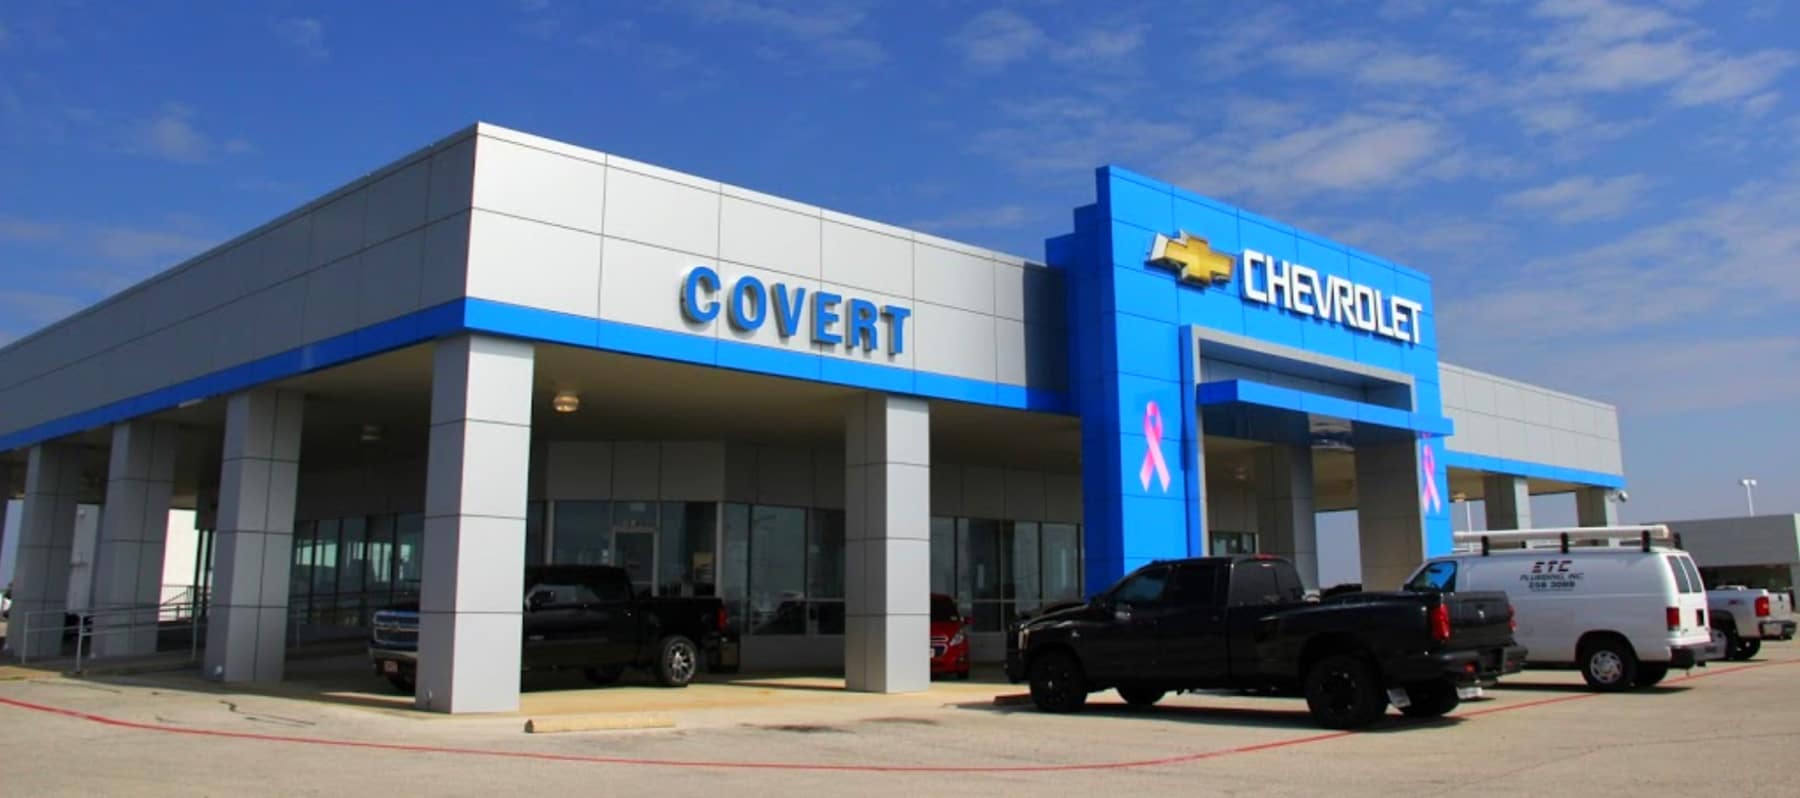 An exterior shot of Covert Chevrolet dealership